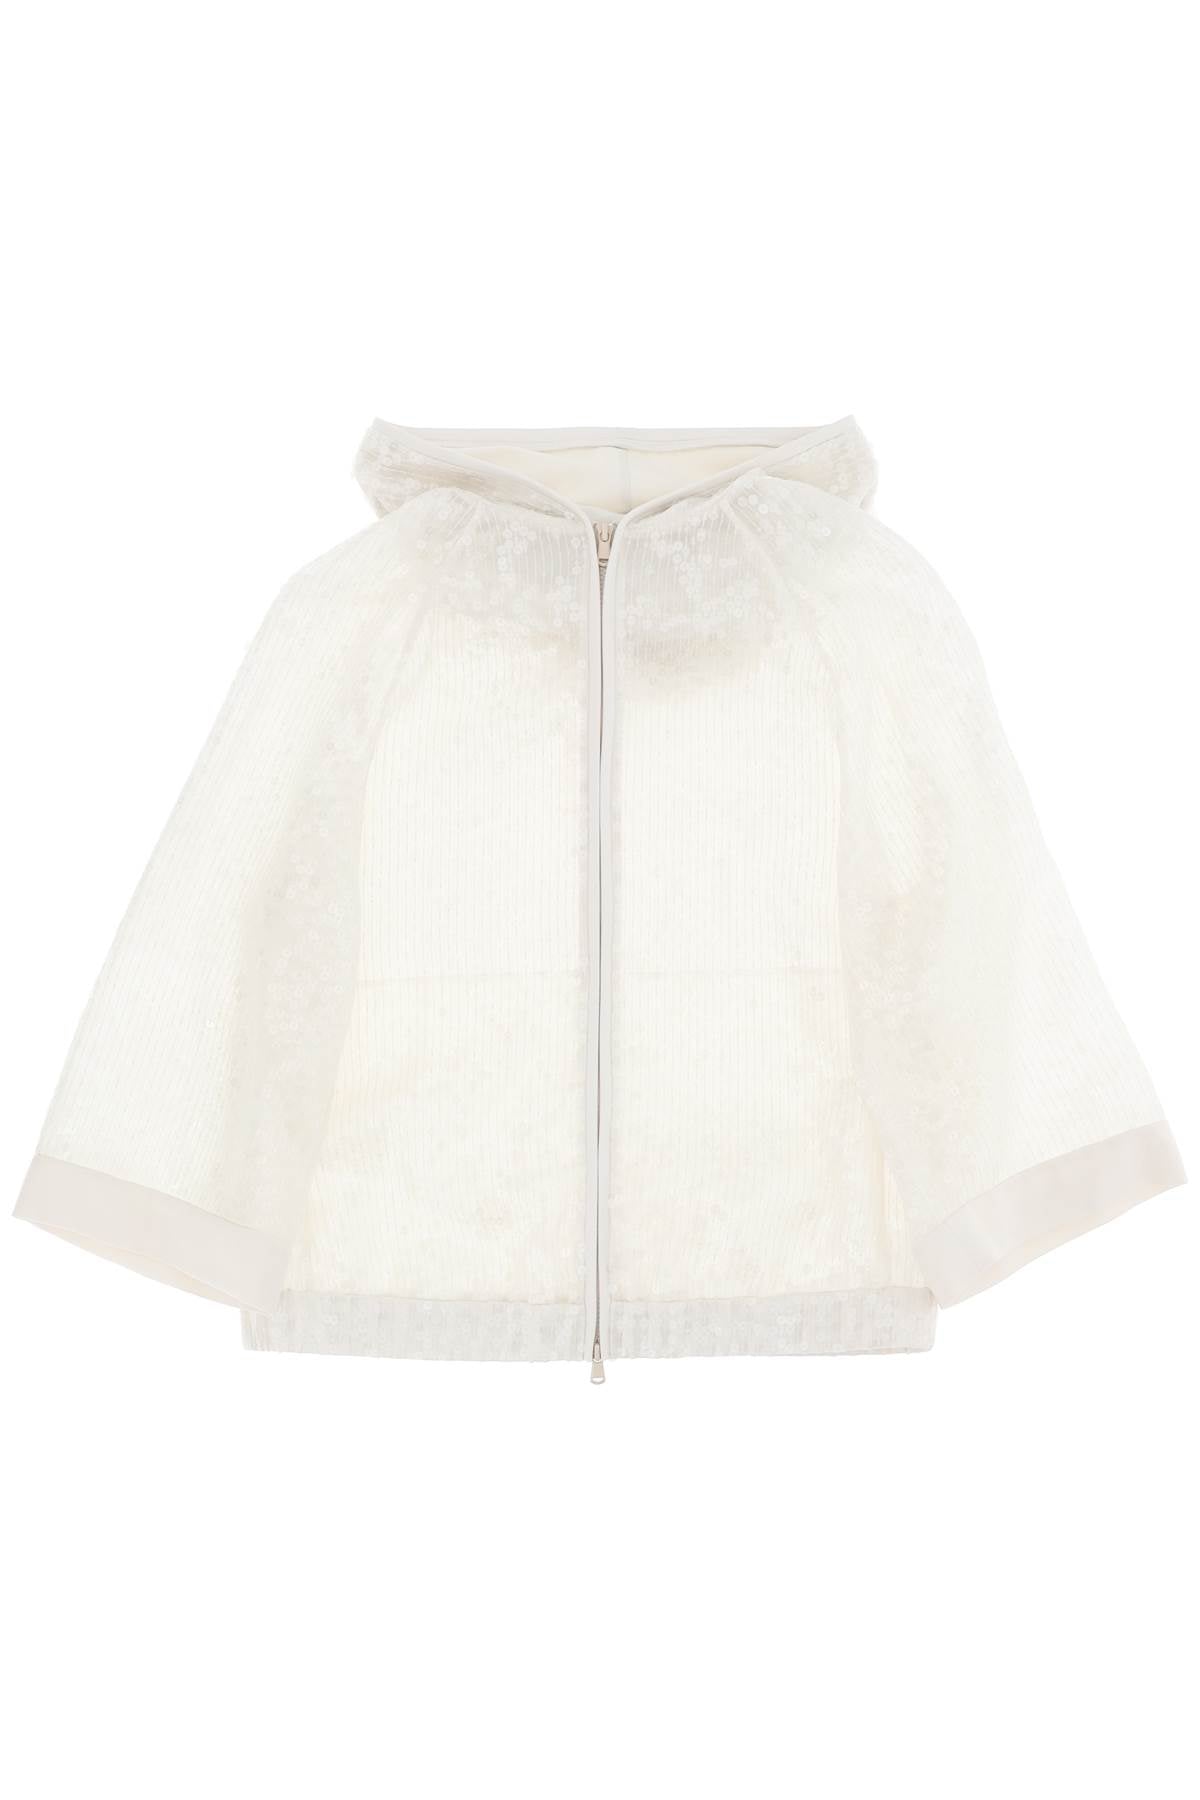 Shop Brunello Cucinelli White Silk Crispy Jacket With Sequins For Women